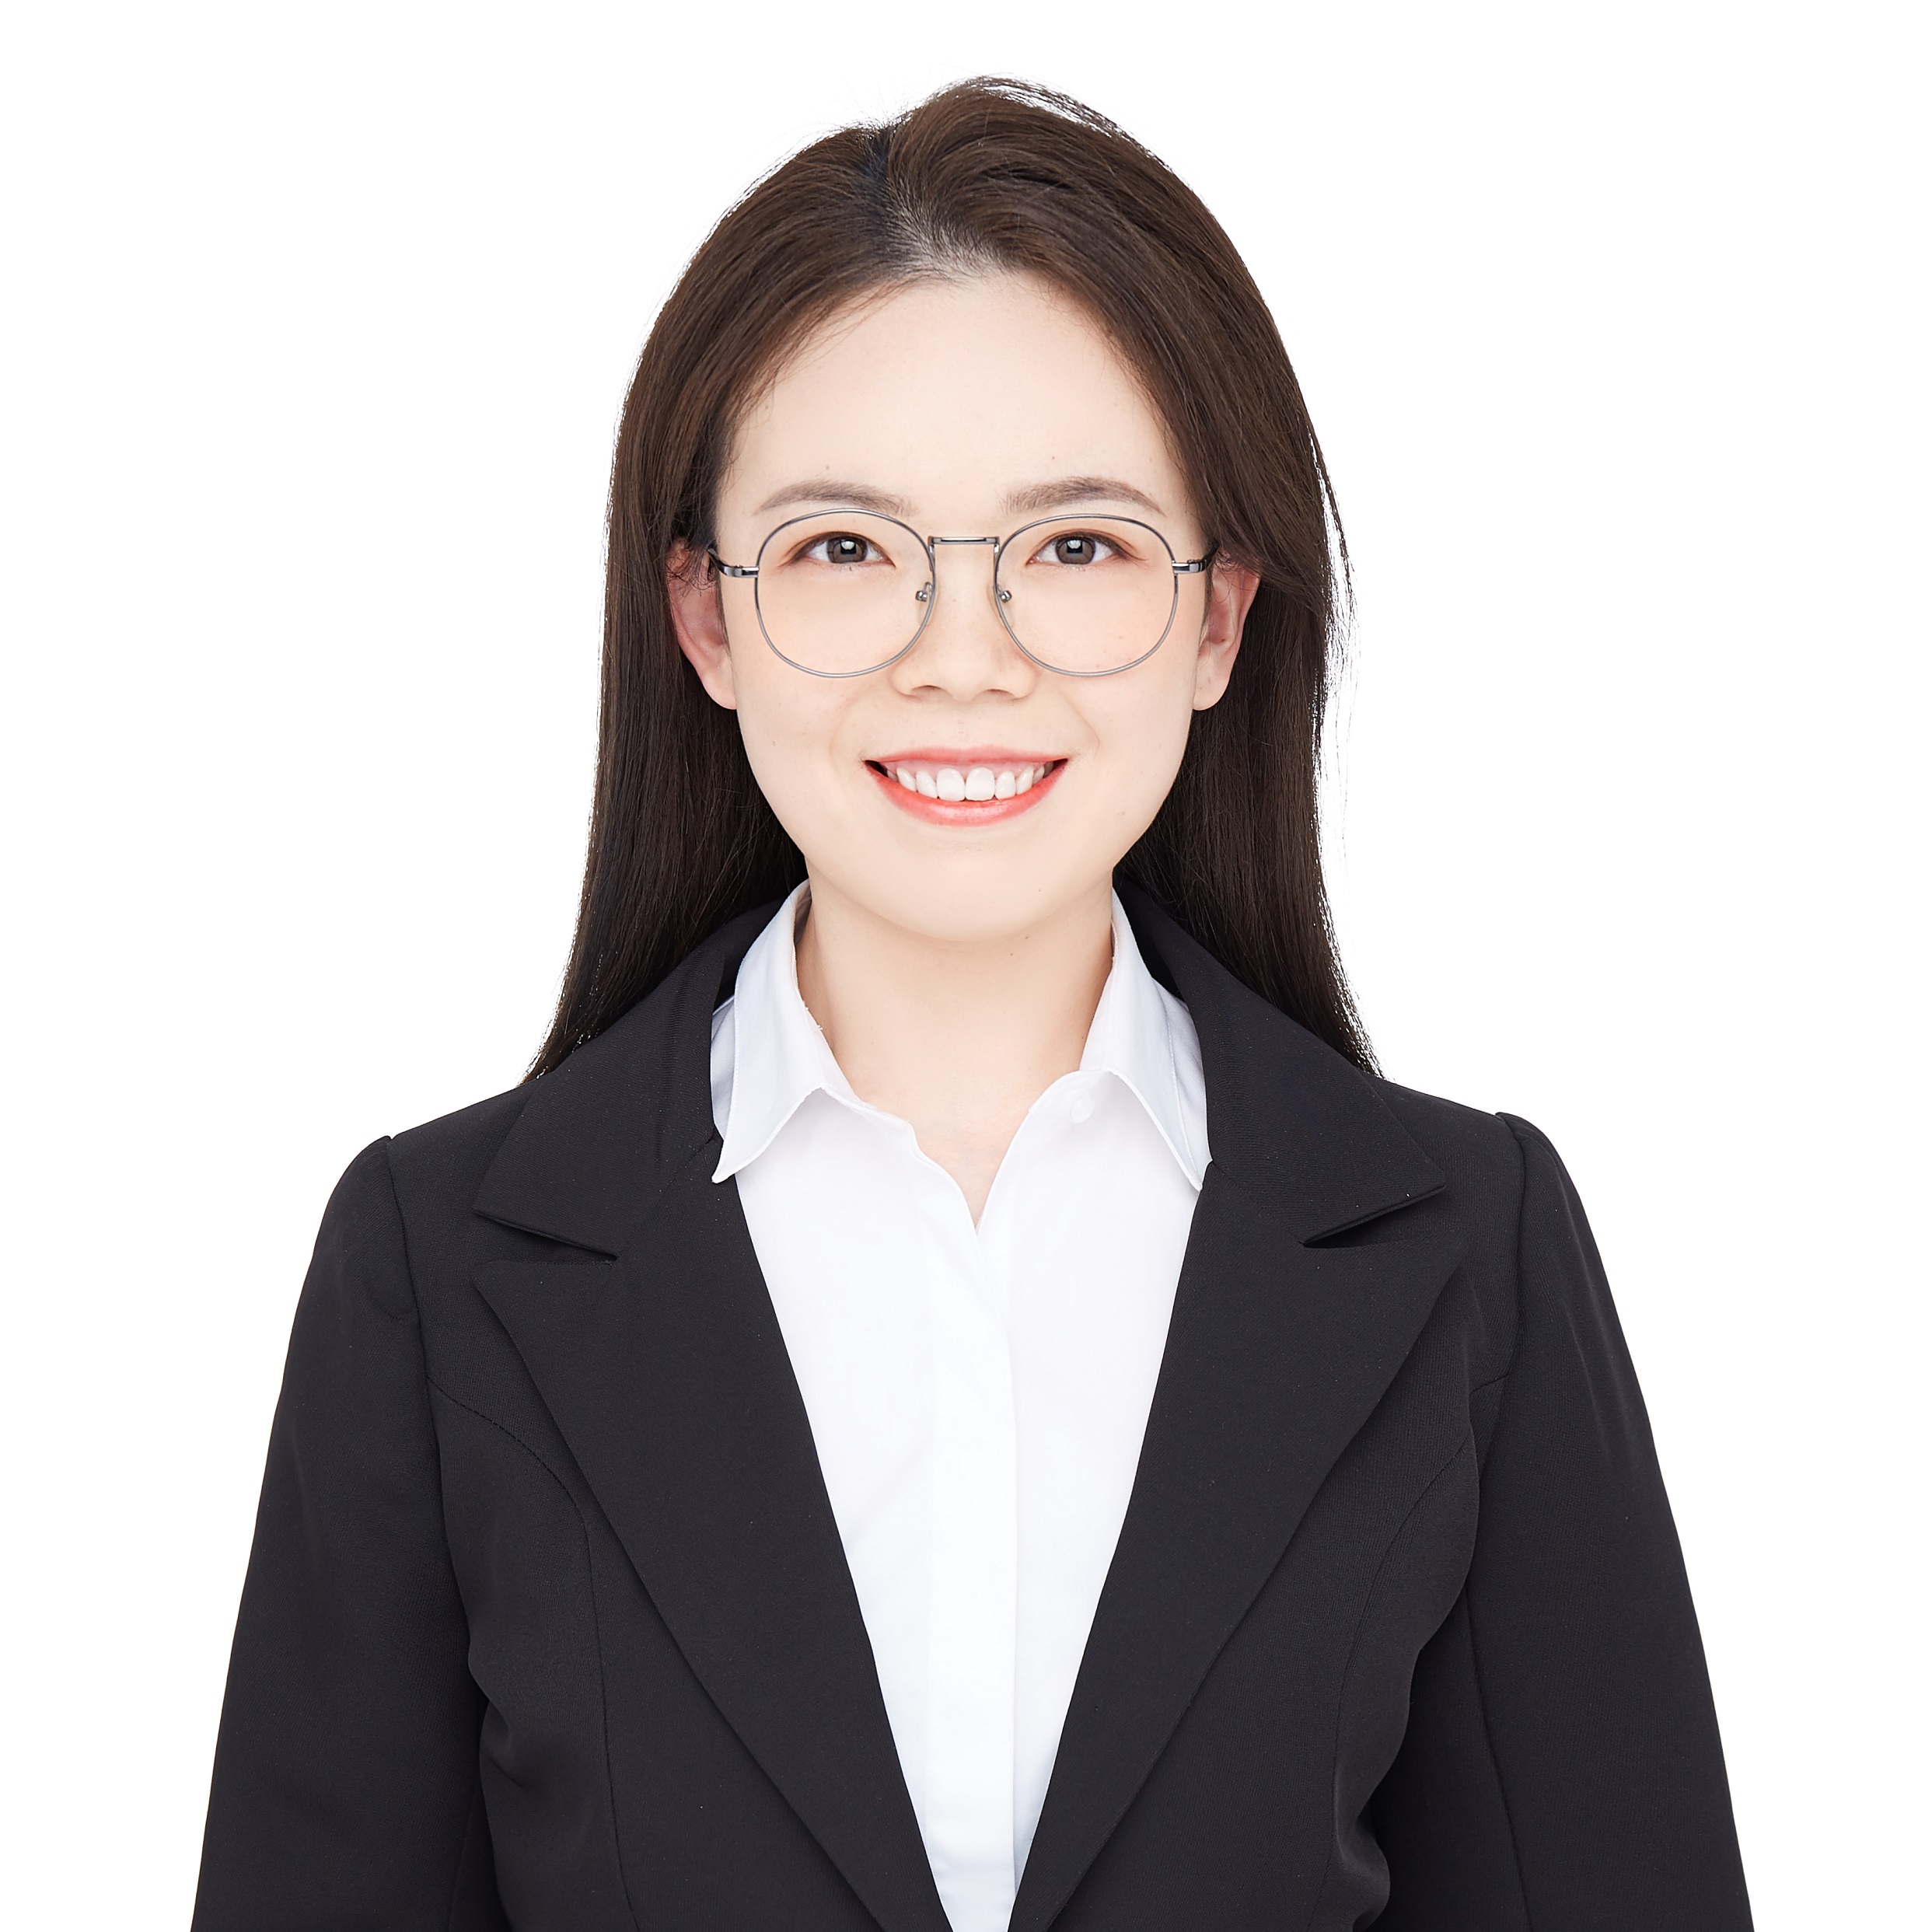 Pan Wang - Technical Sales Manager